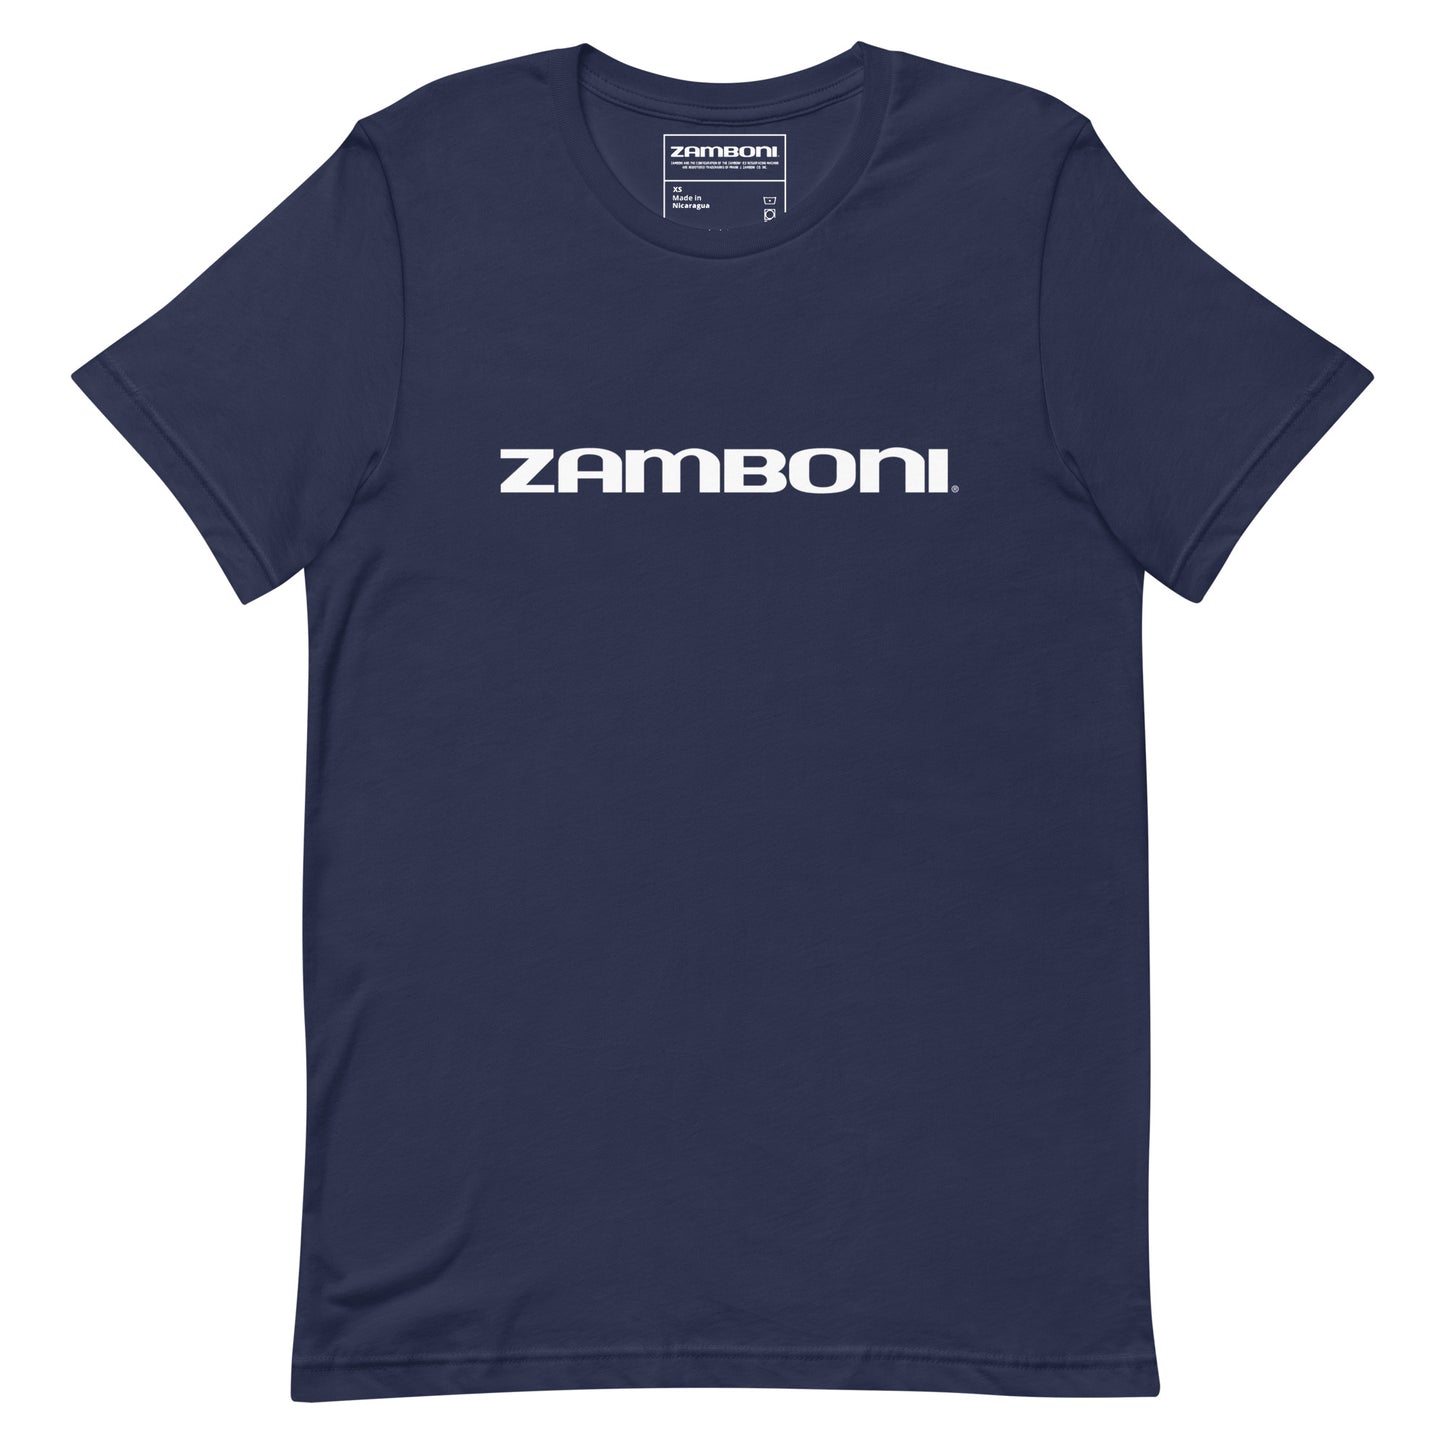 Zamboni Machine Official Wordmark Tee